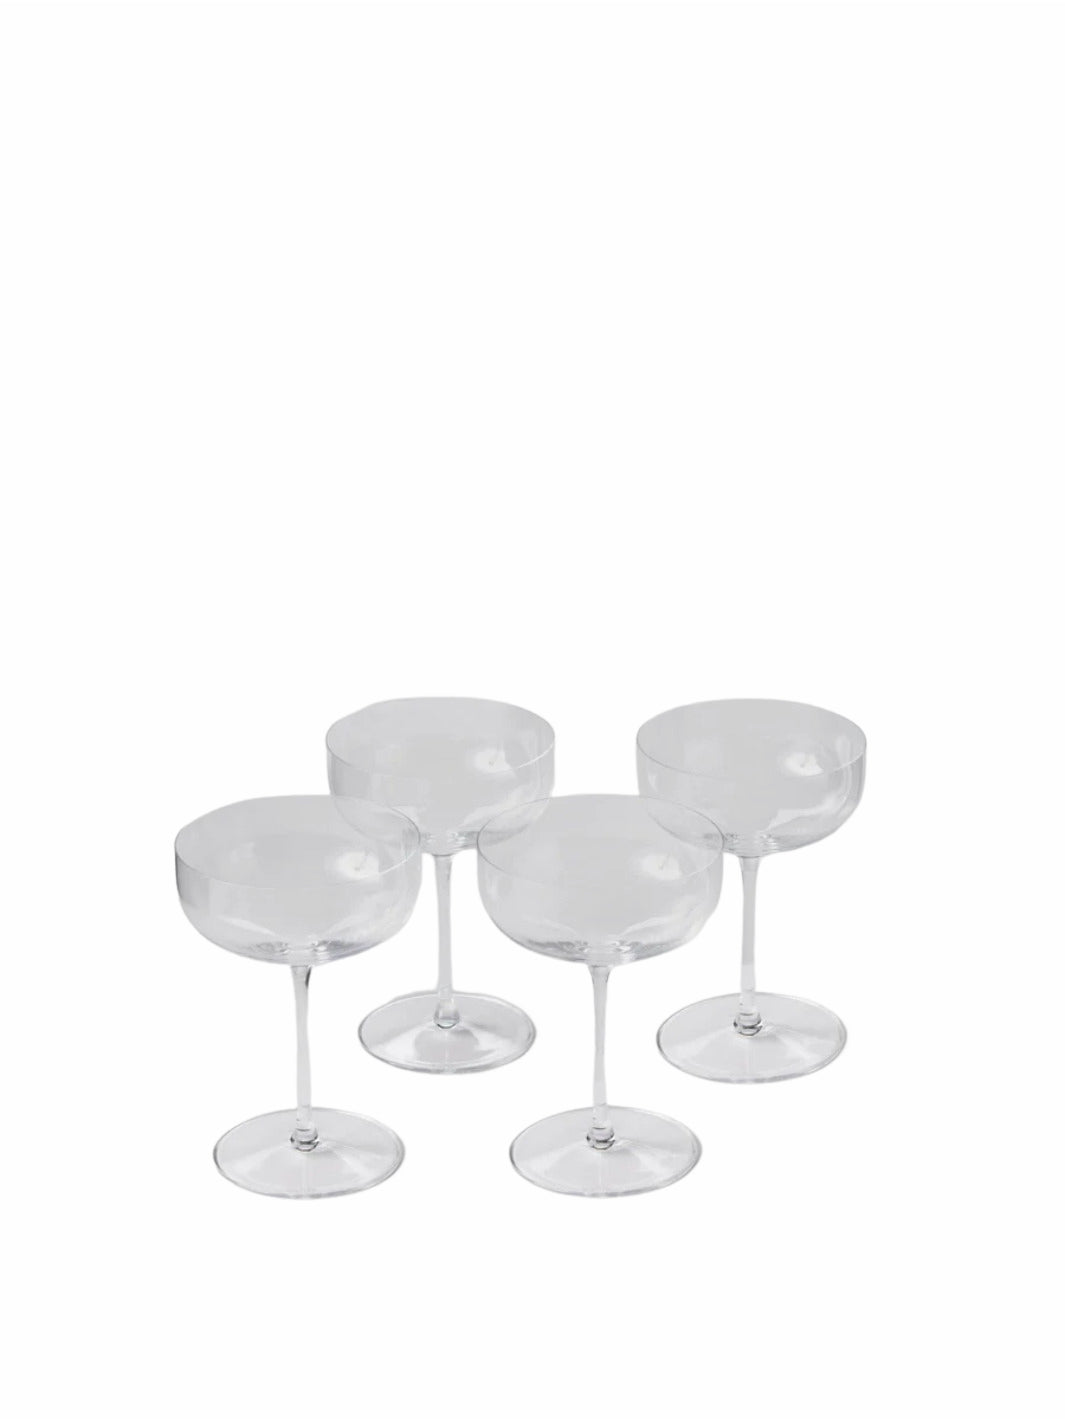 Mikasa Berlin Set of 4 Martini Glasses